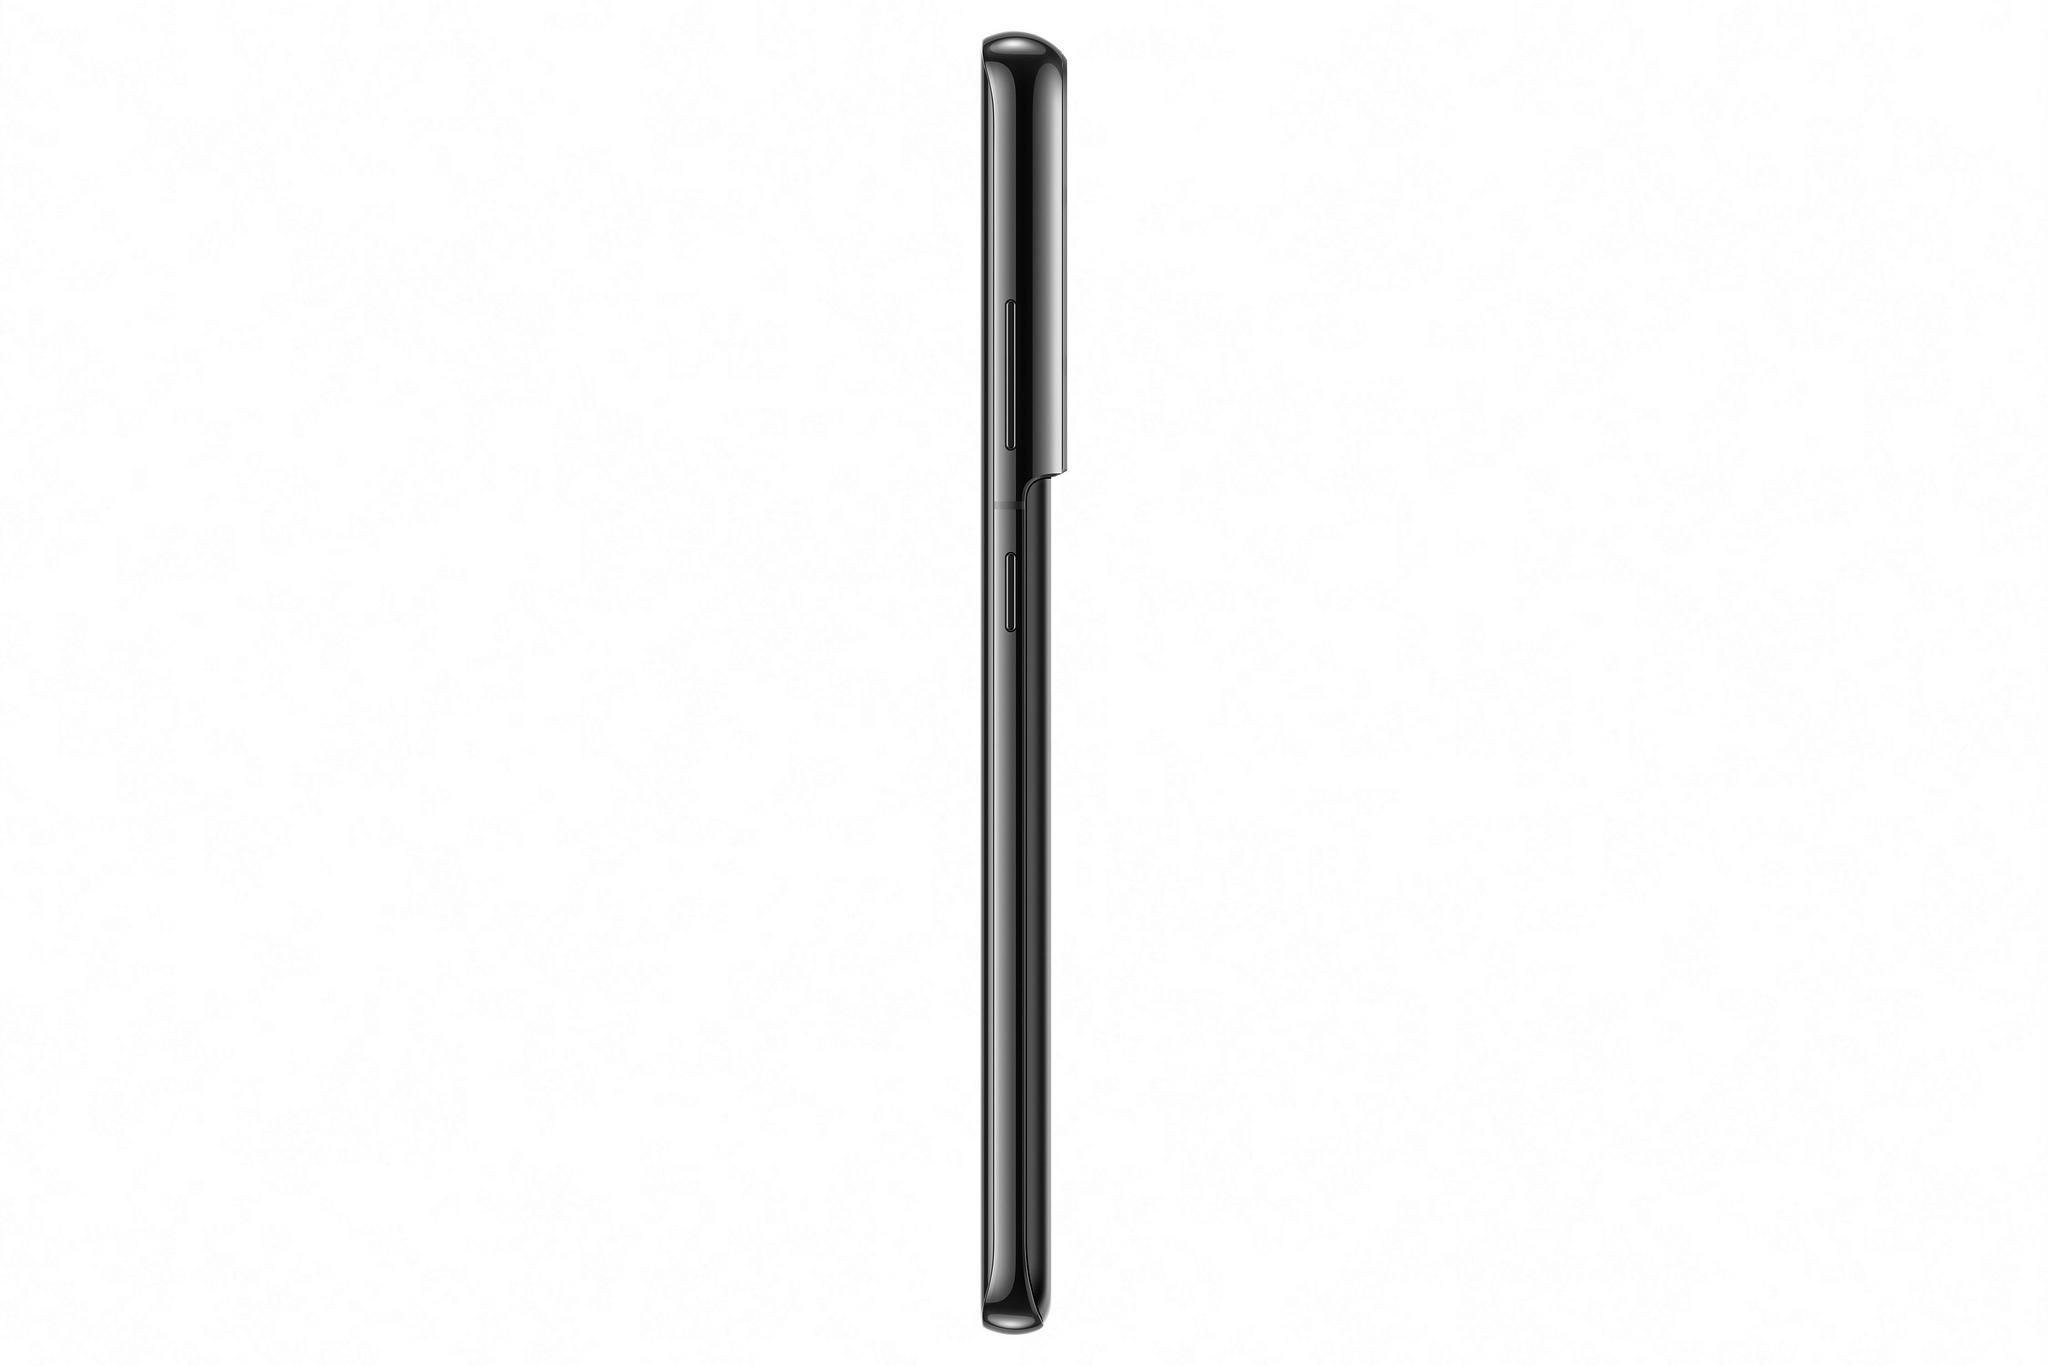 Pre-Order: Samsung Galaxy S21 Ultra 5G 512GB Phone - Black